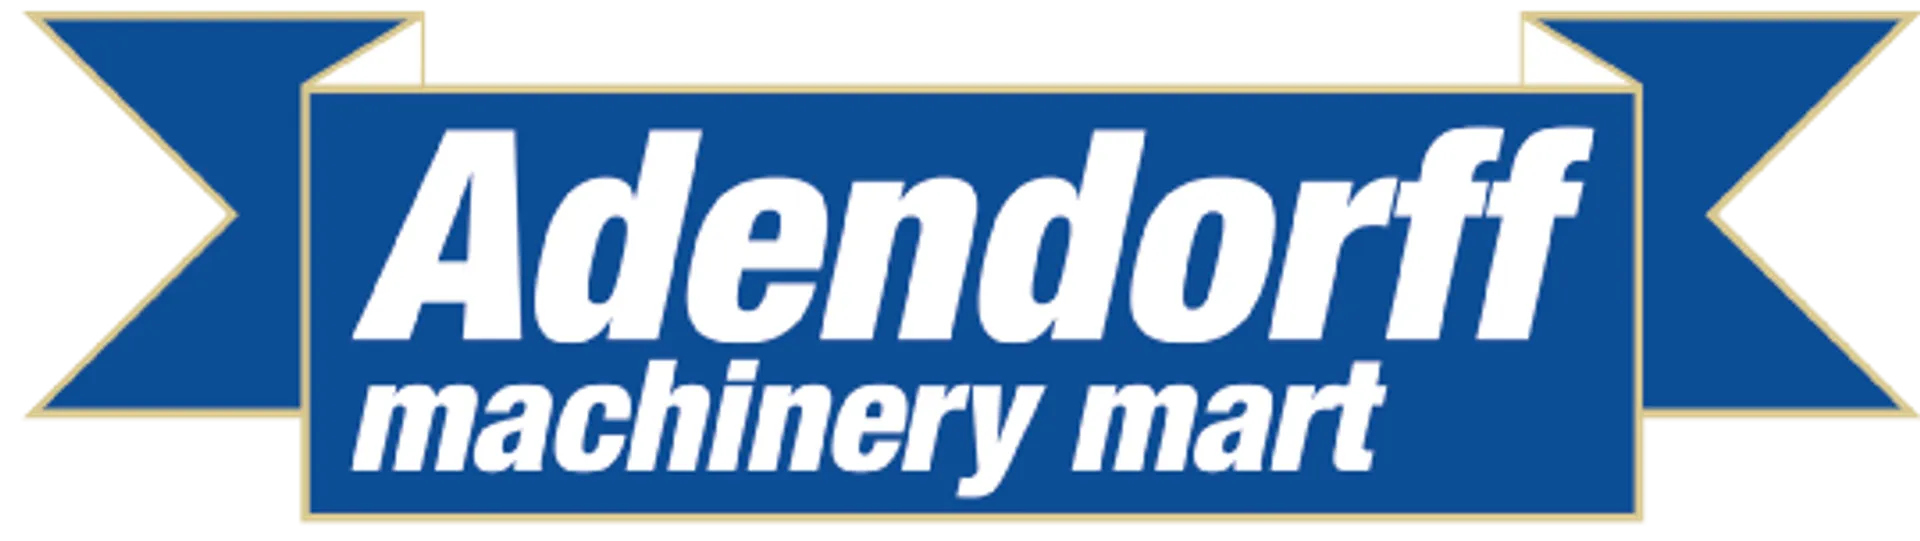 ADENDORFF MACHINERY MART logo current weekly ad